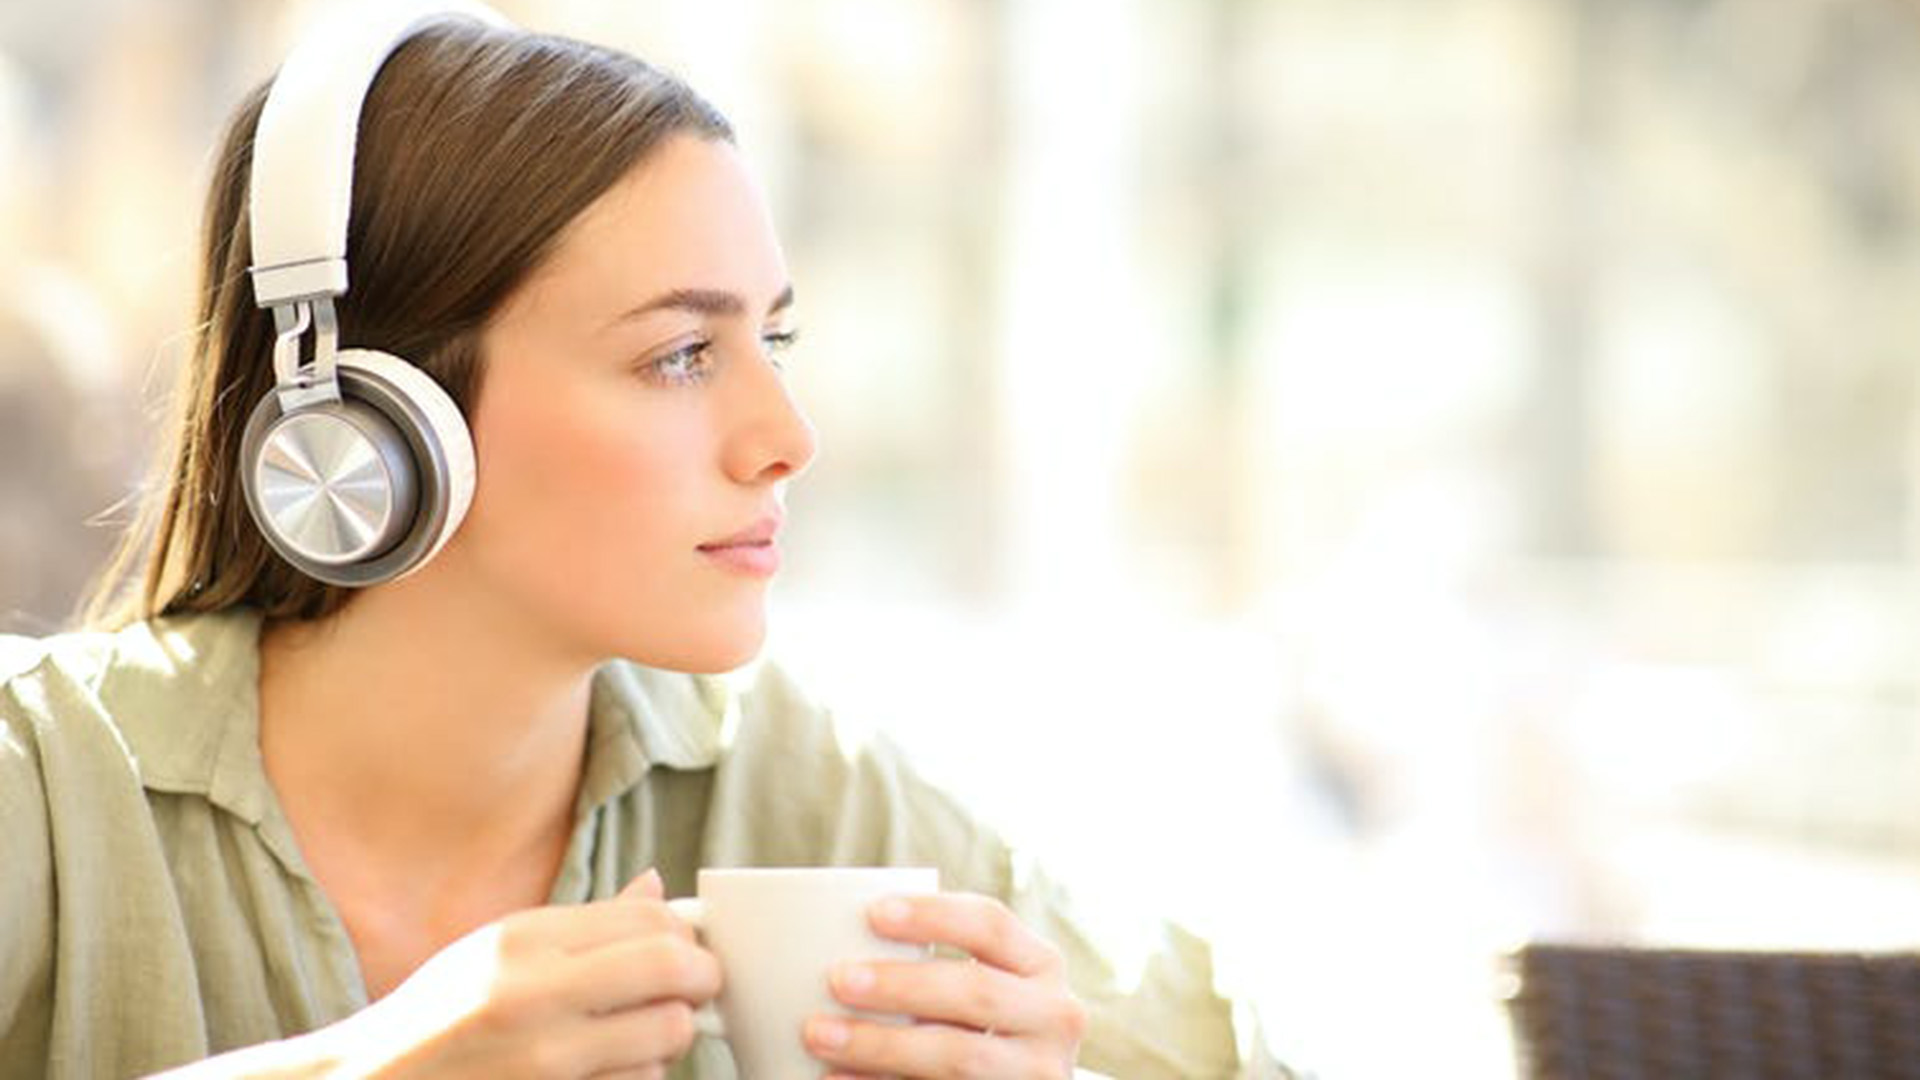 pensive woman wearing wireless headphones relaxing. Shutterstock